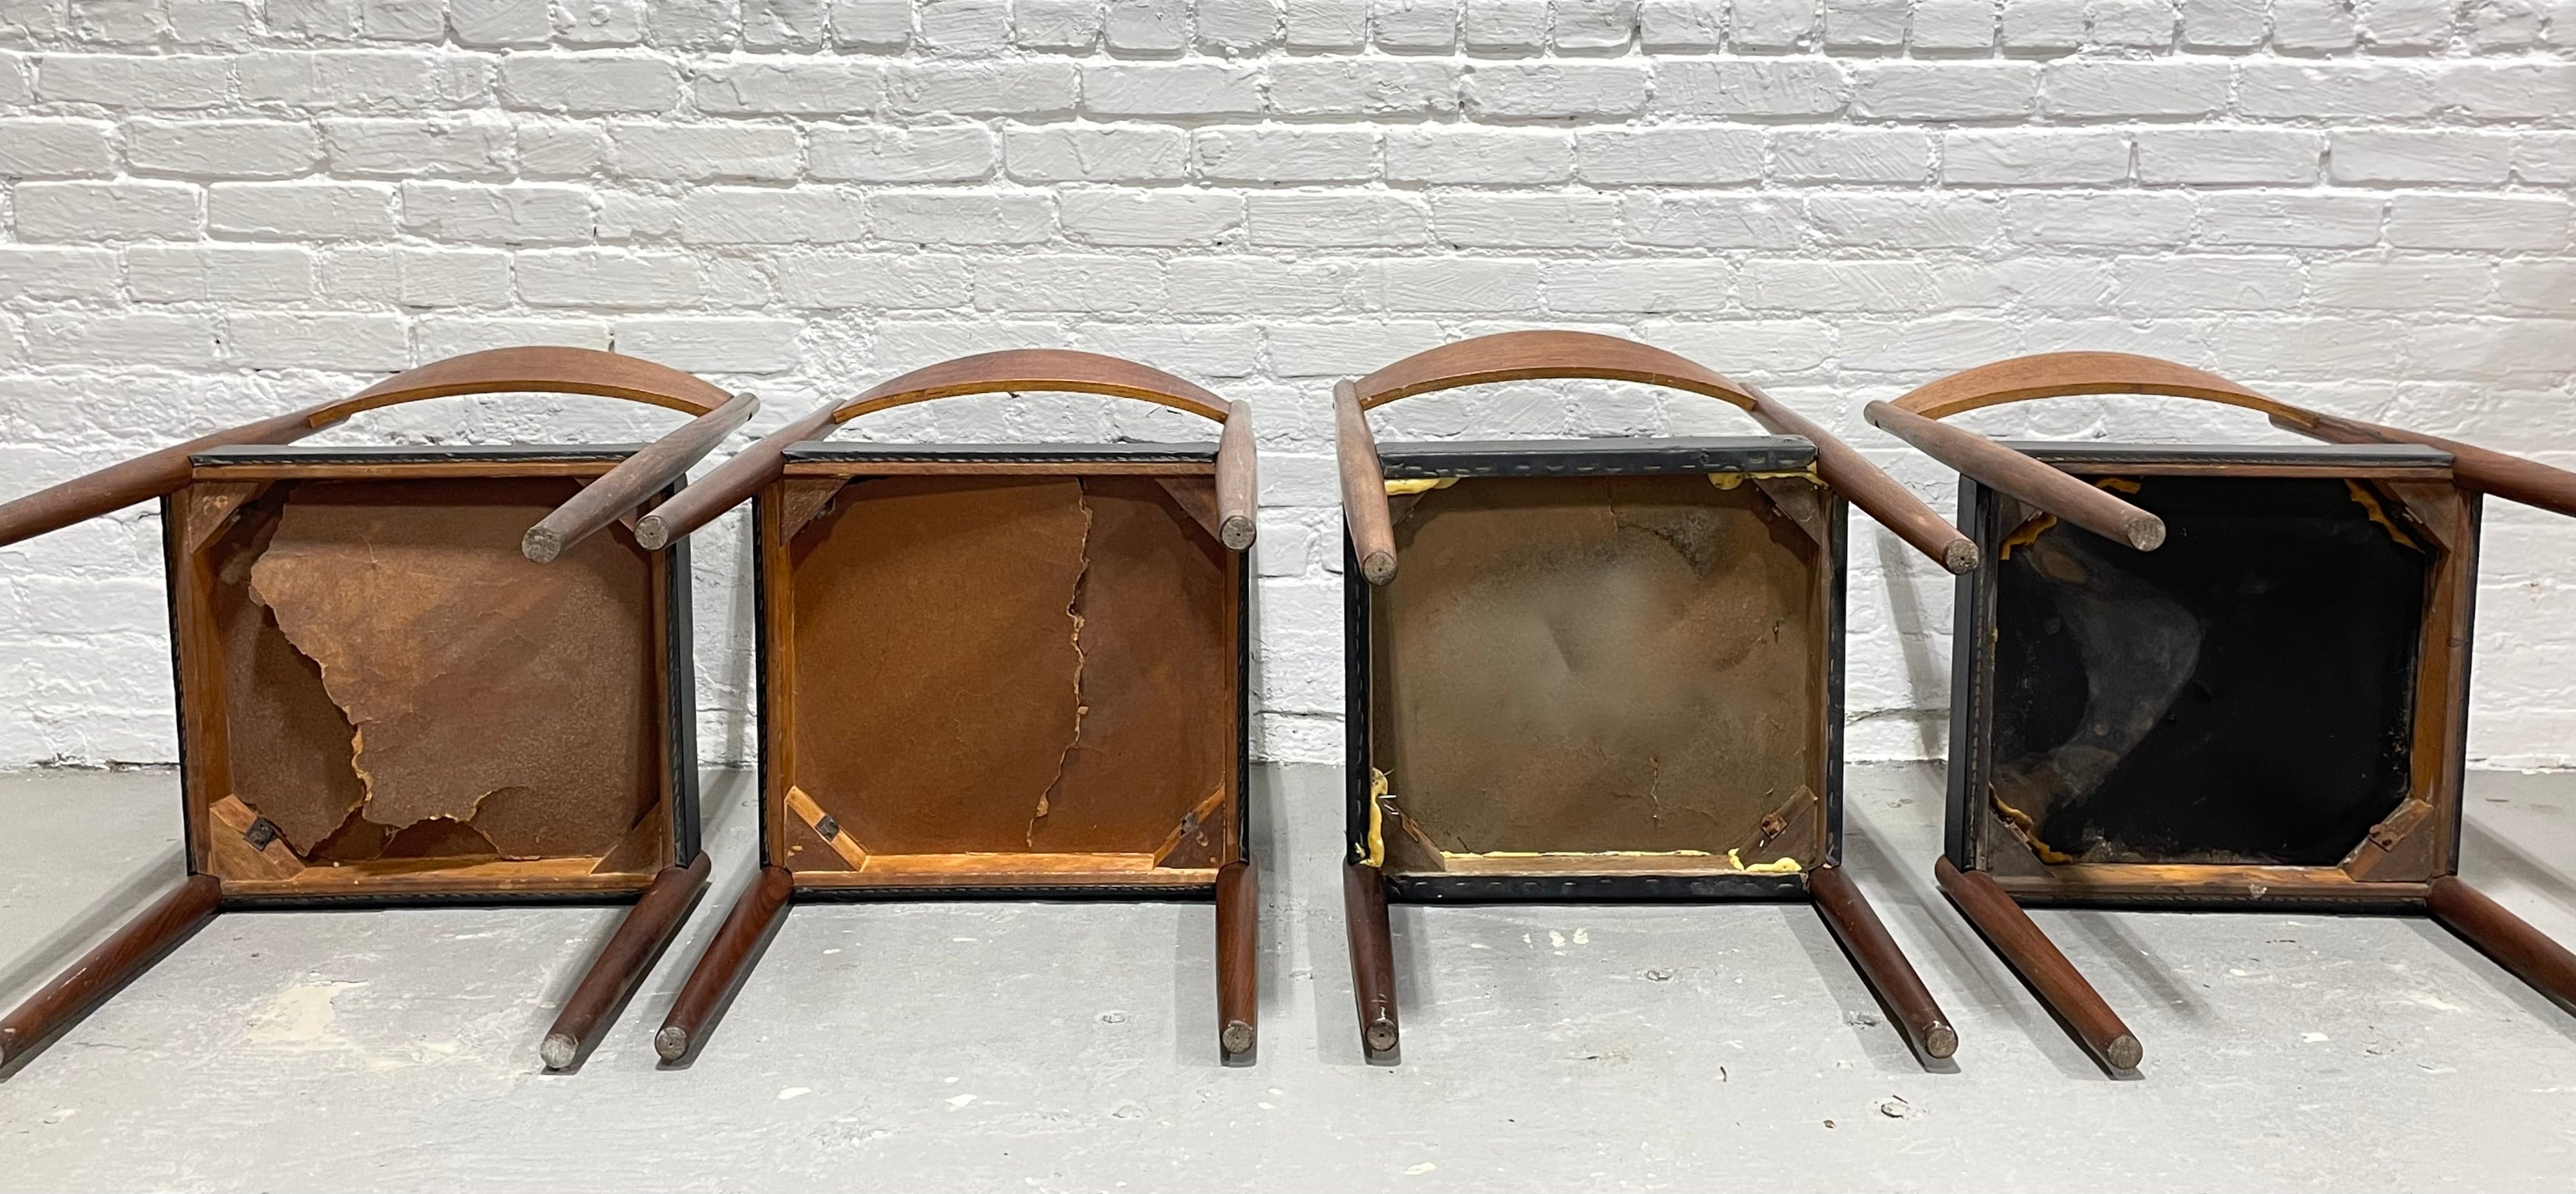 IMPERFECT Mid Century Modern Teak Danish DINING Chairs, Set of 4